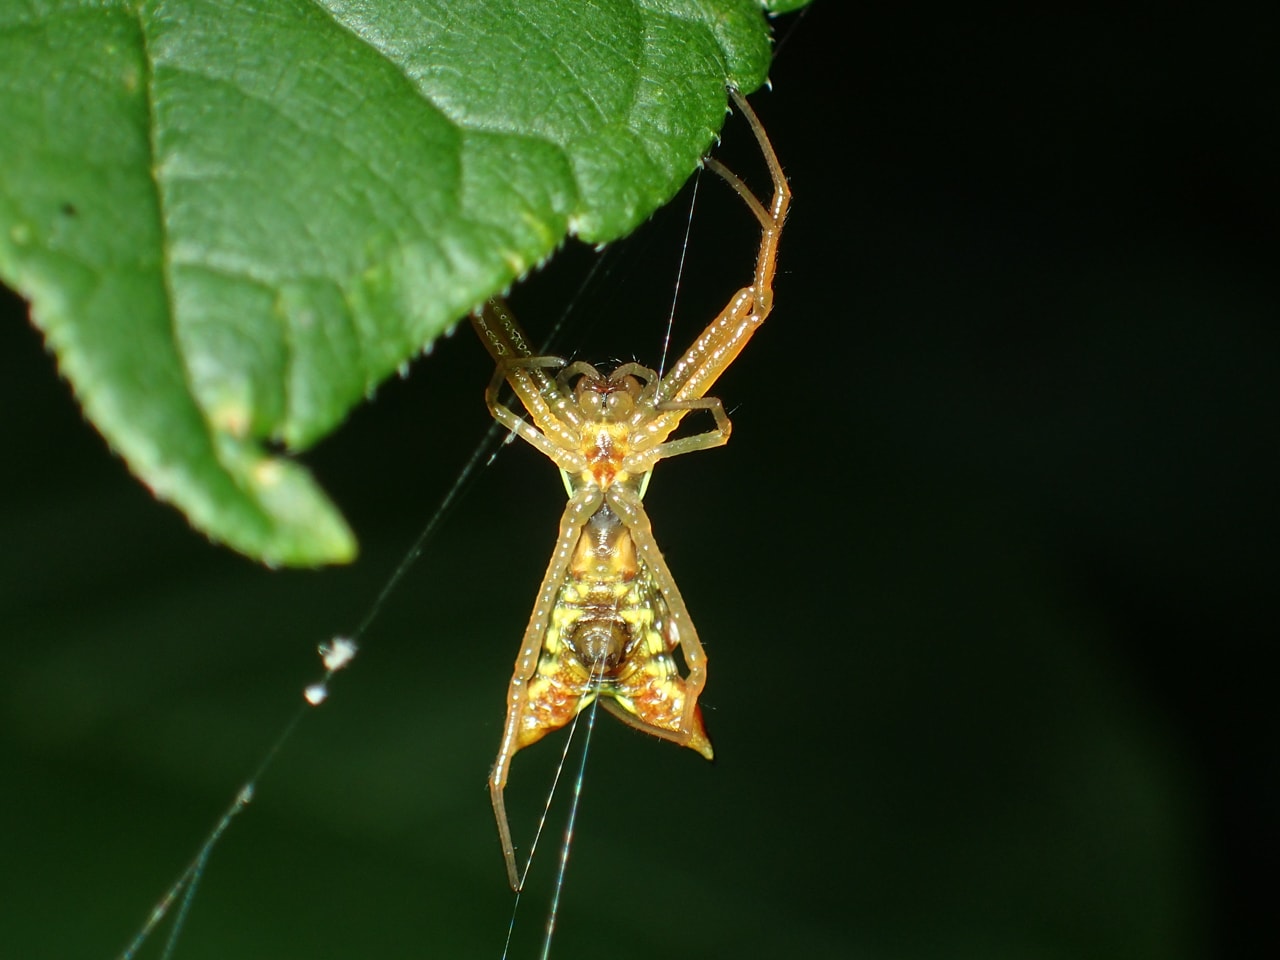 Picture of Micrathena sagittata (Arrow-shaped Micrathena) - Female - Ventral